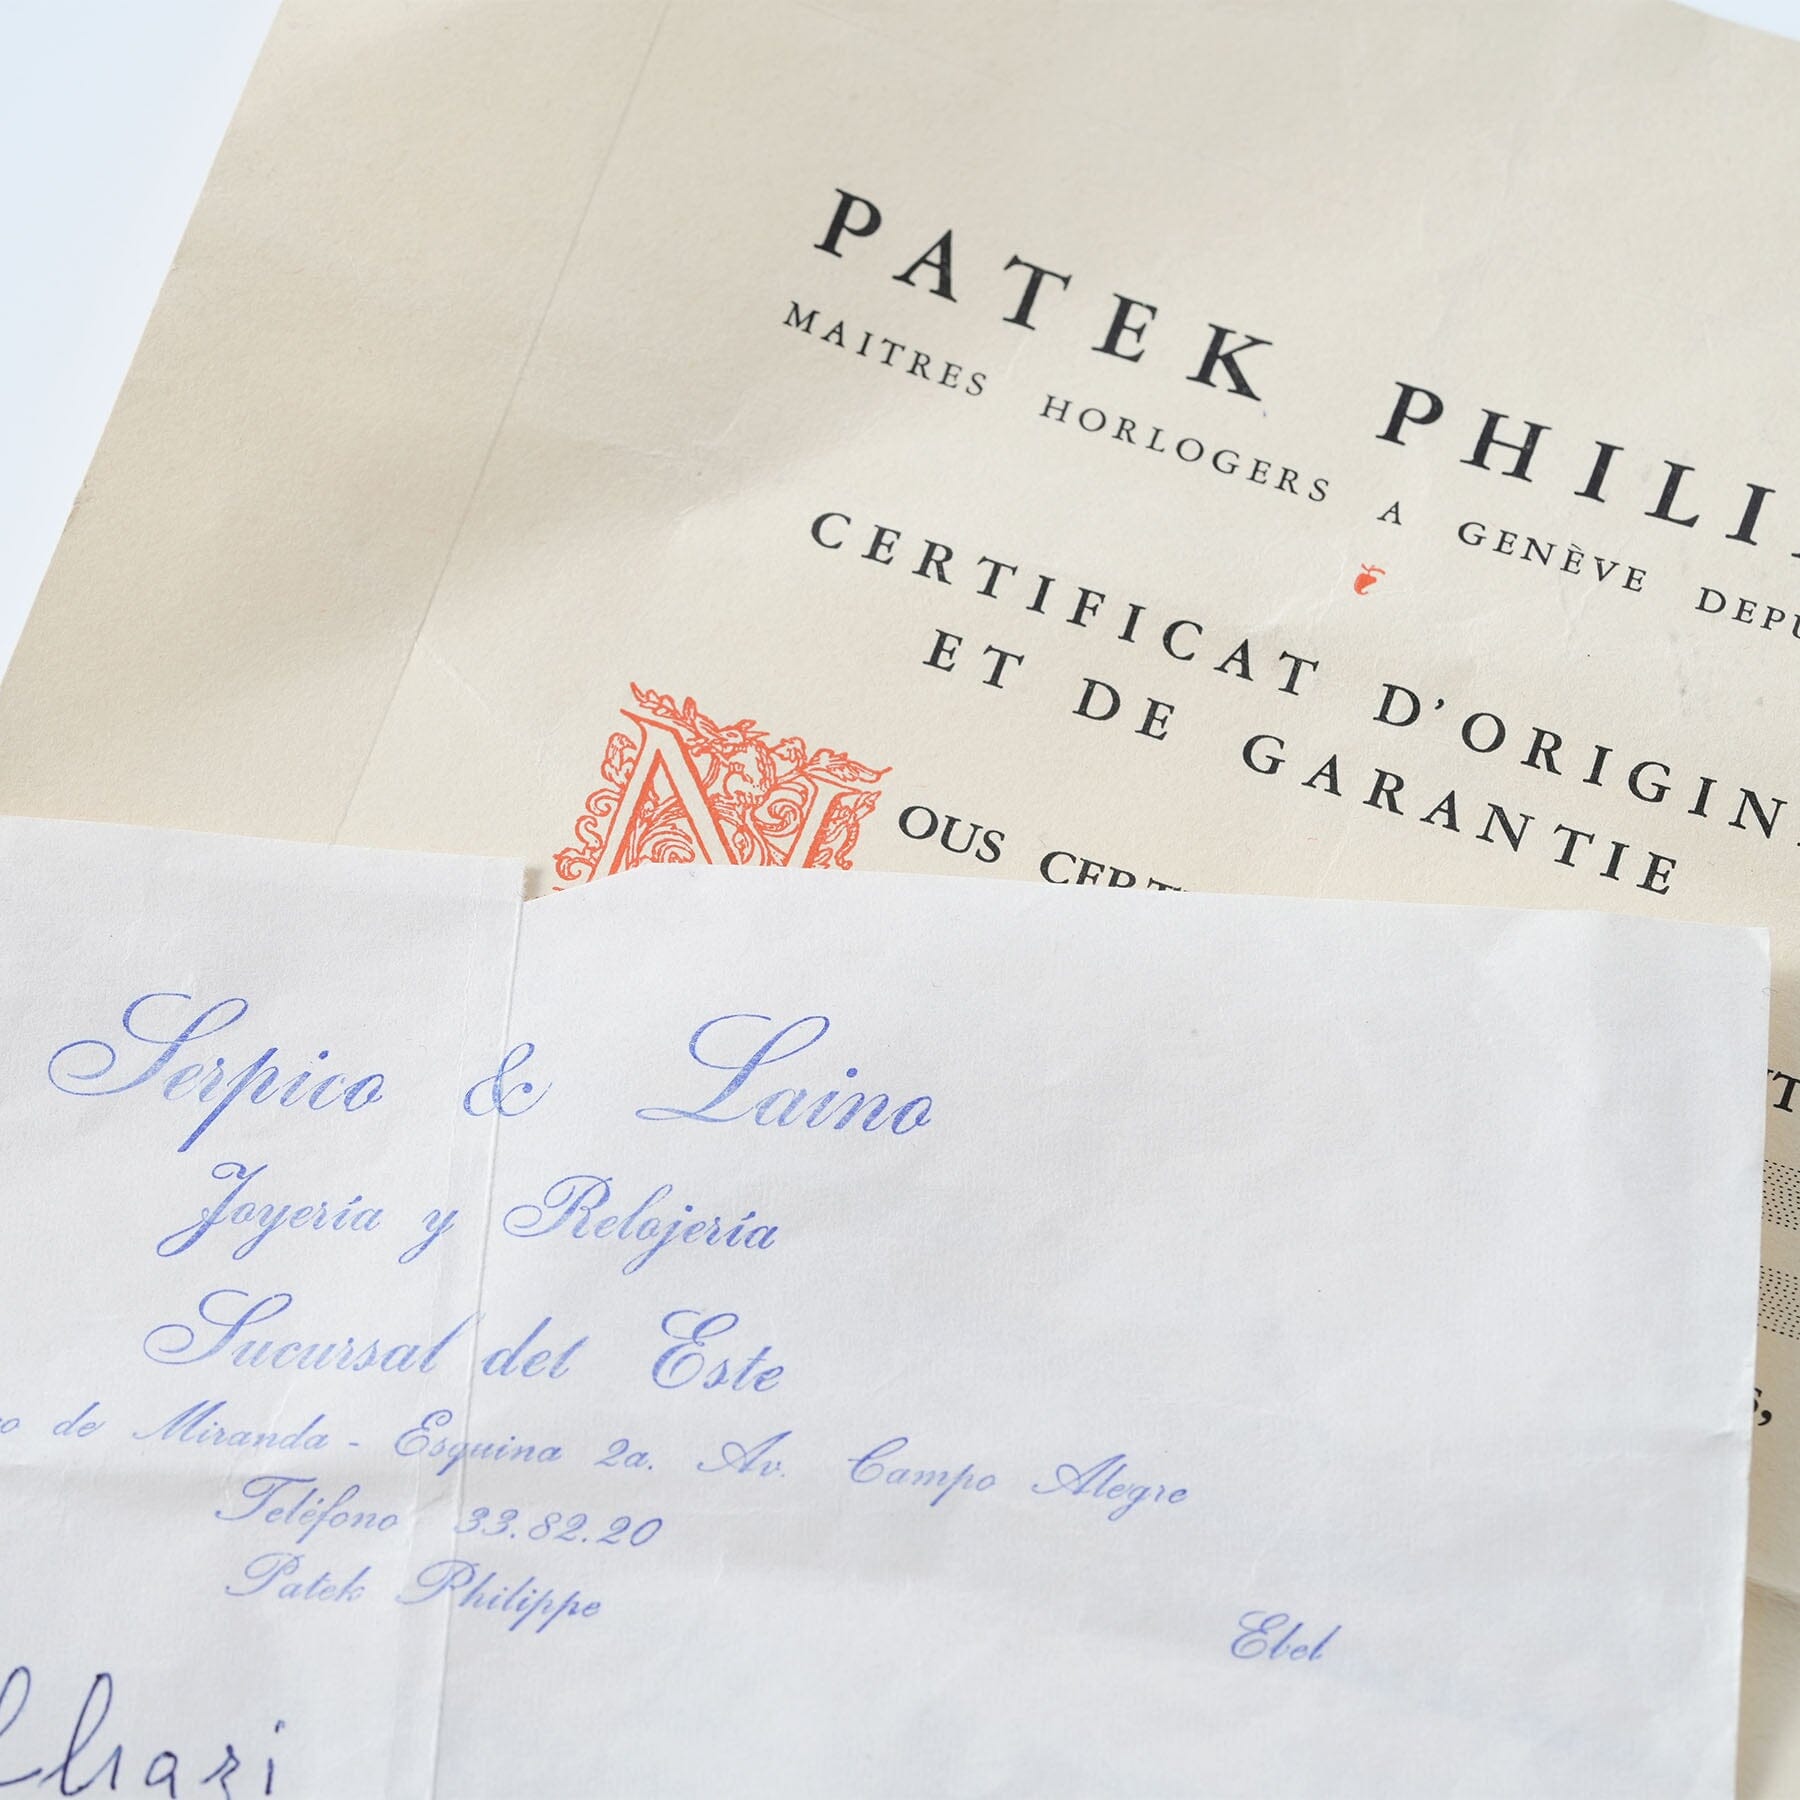 Patek Philippe Calatrava 3445 Double Signed Serpico y Laino with Papers